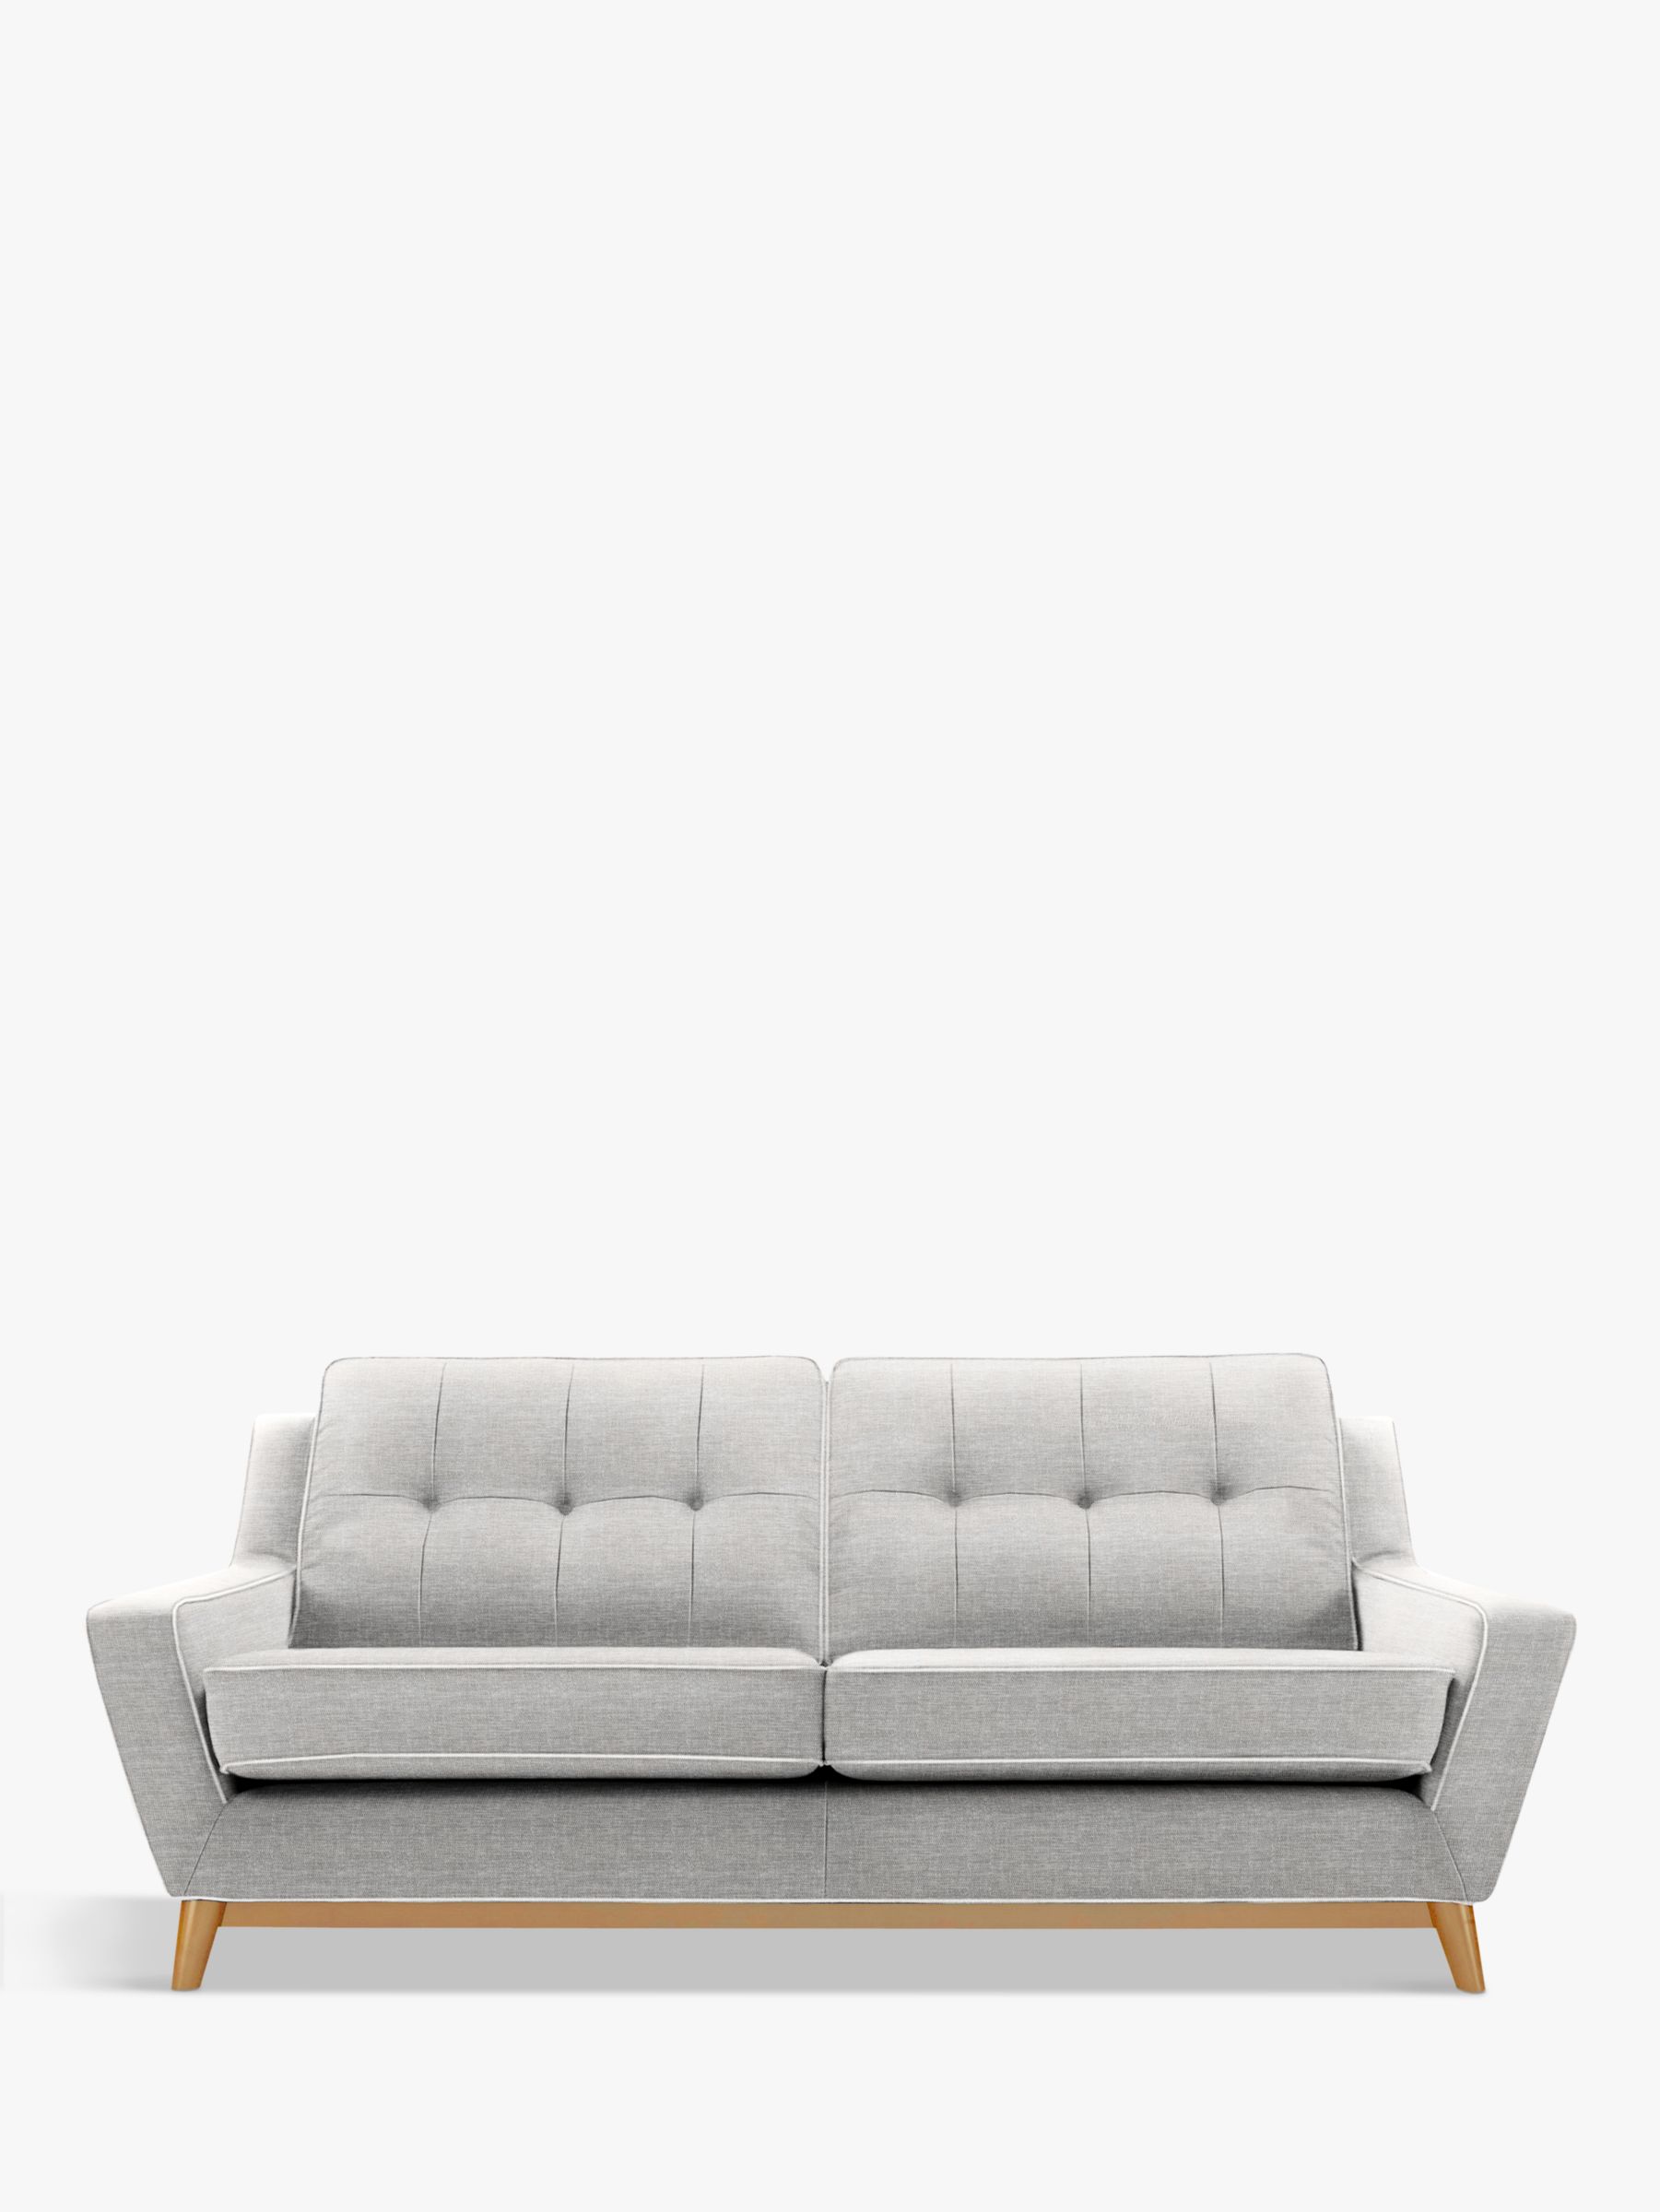 G Plan Vintage The Fifty Three Large Sofa, Marl Grey, width 199cm